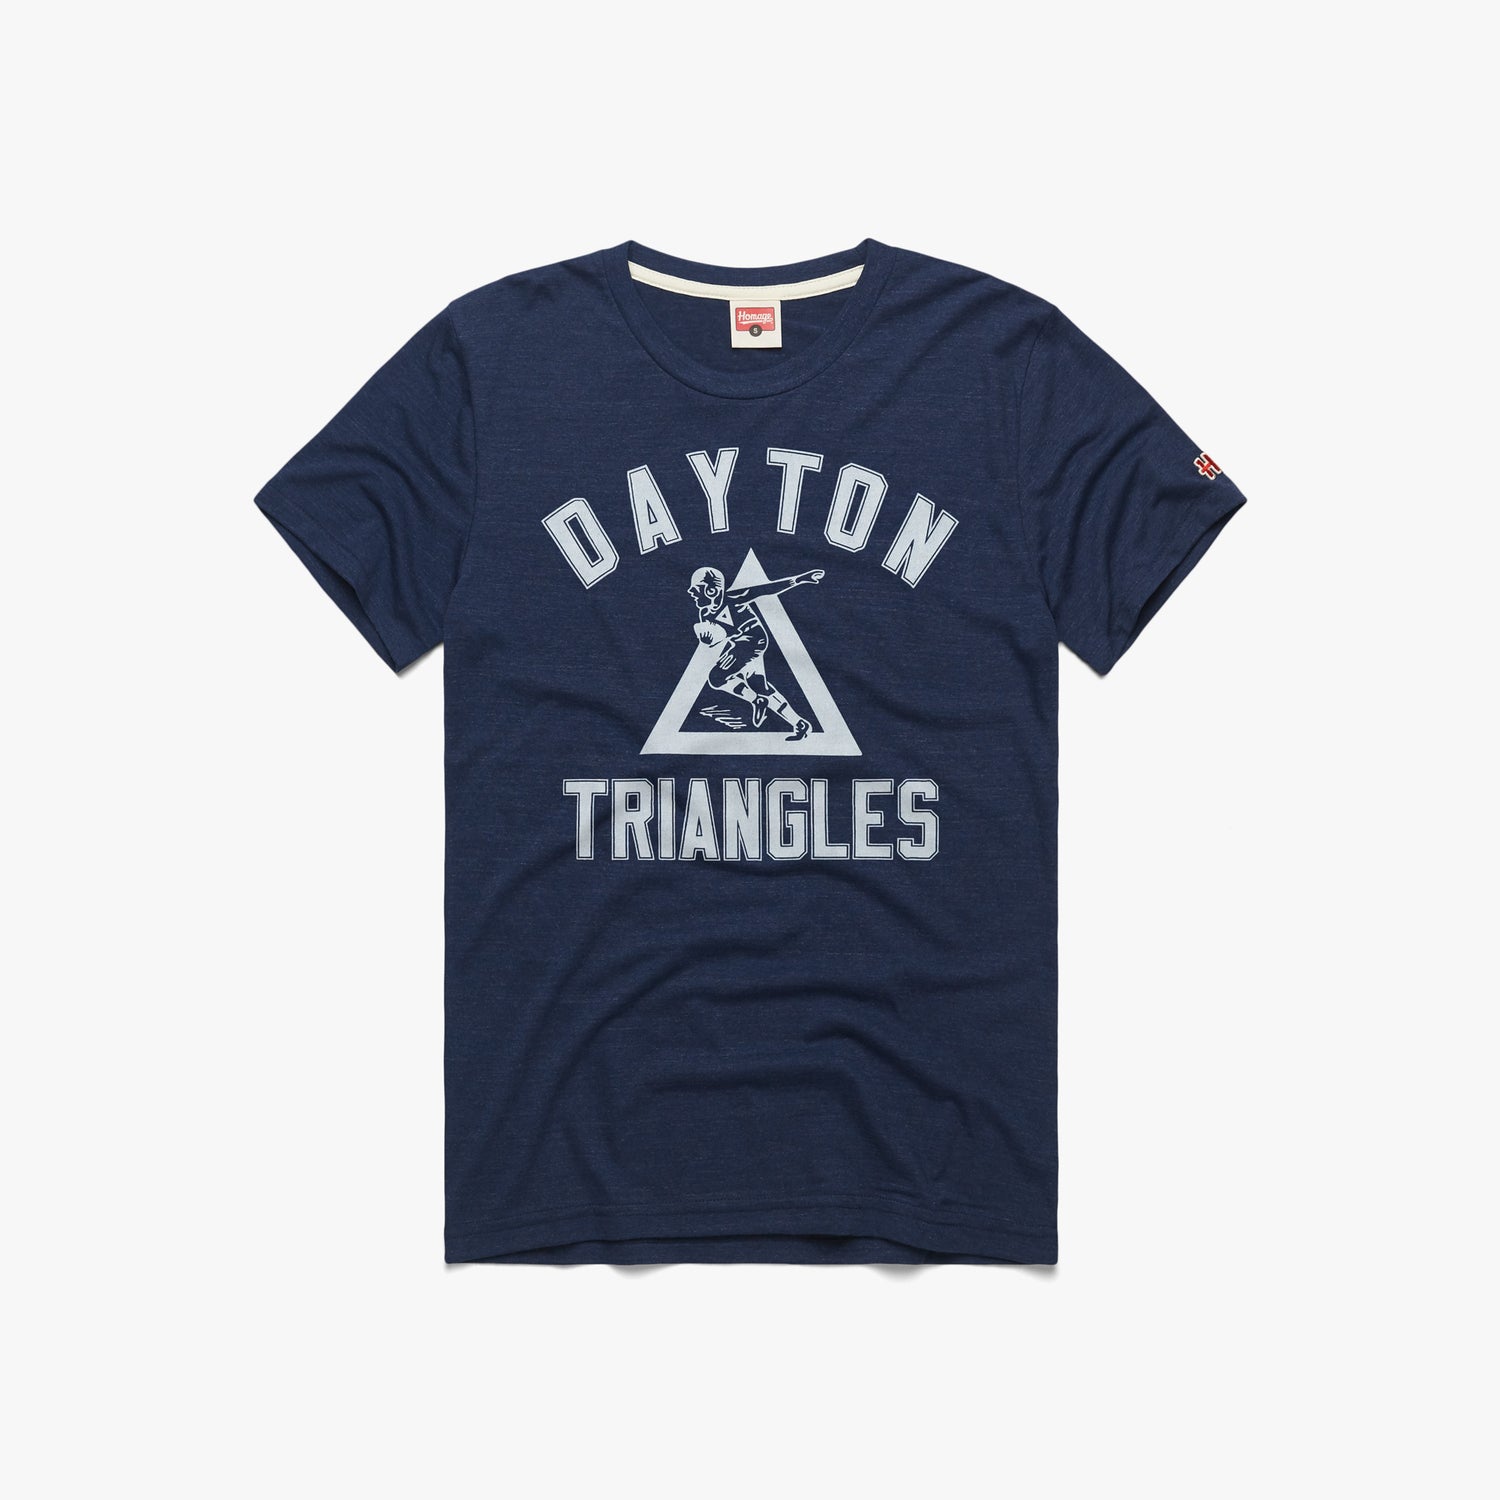 Dayton Triangles